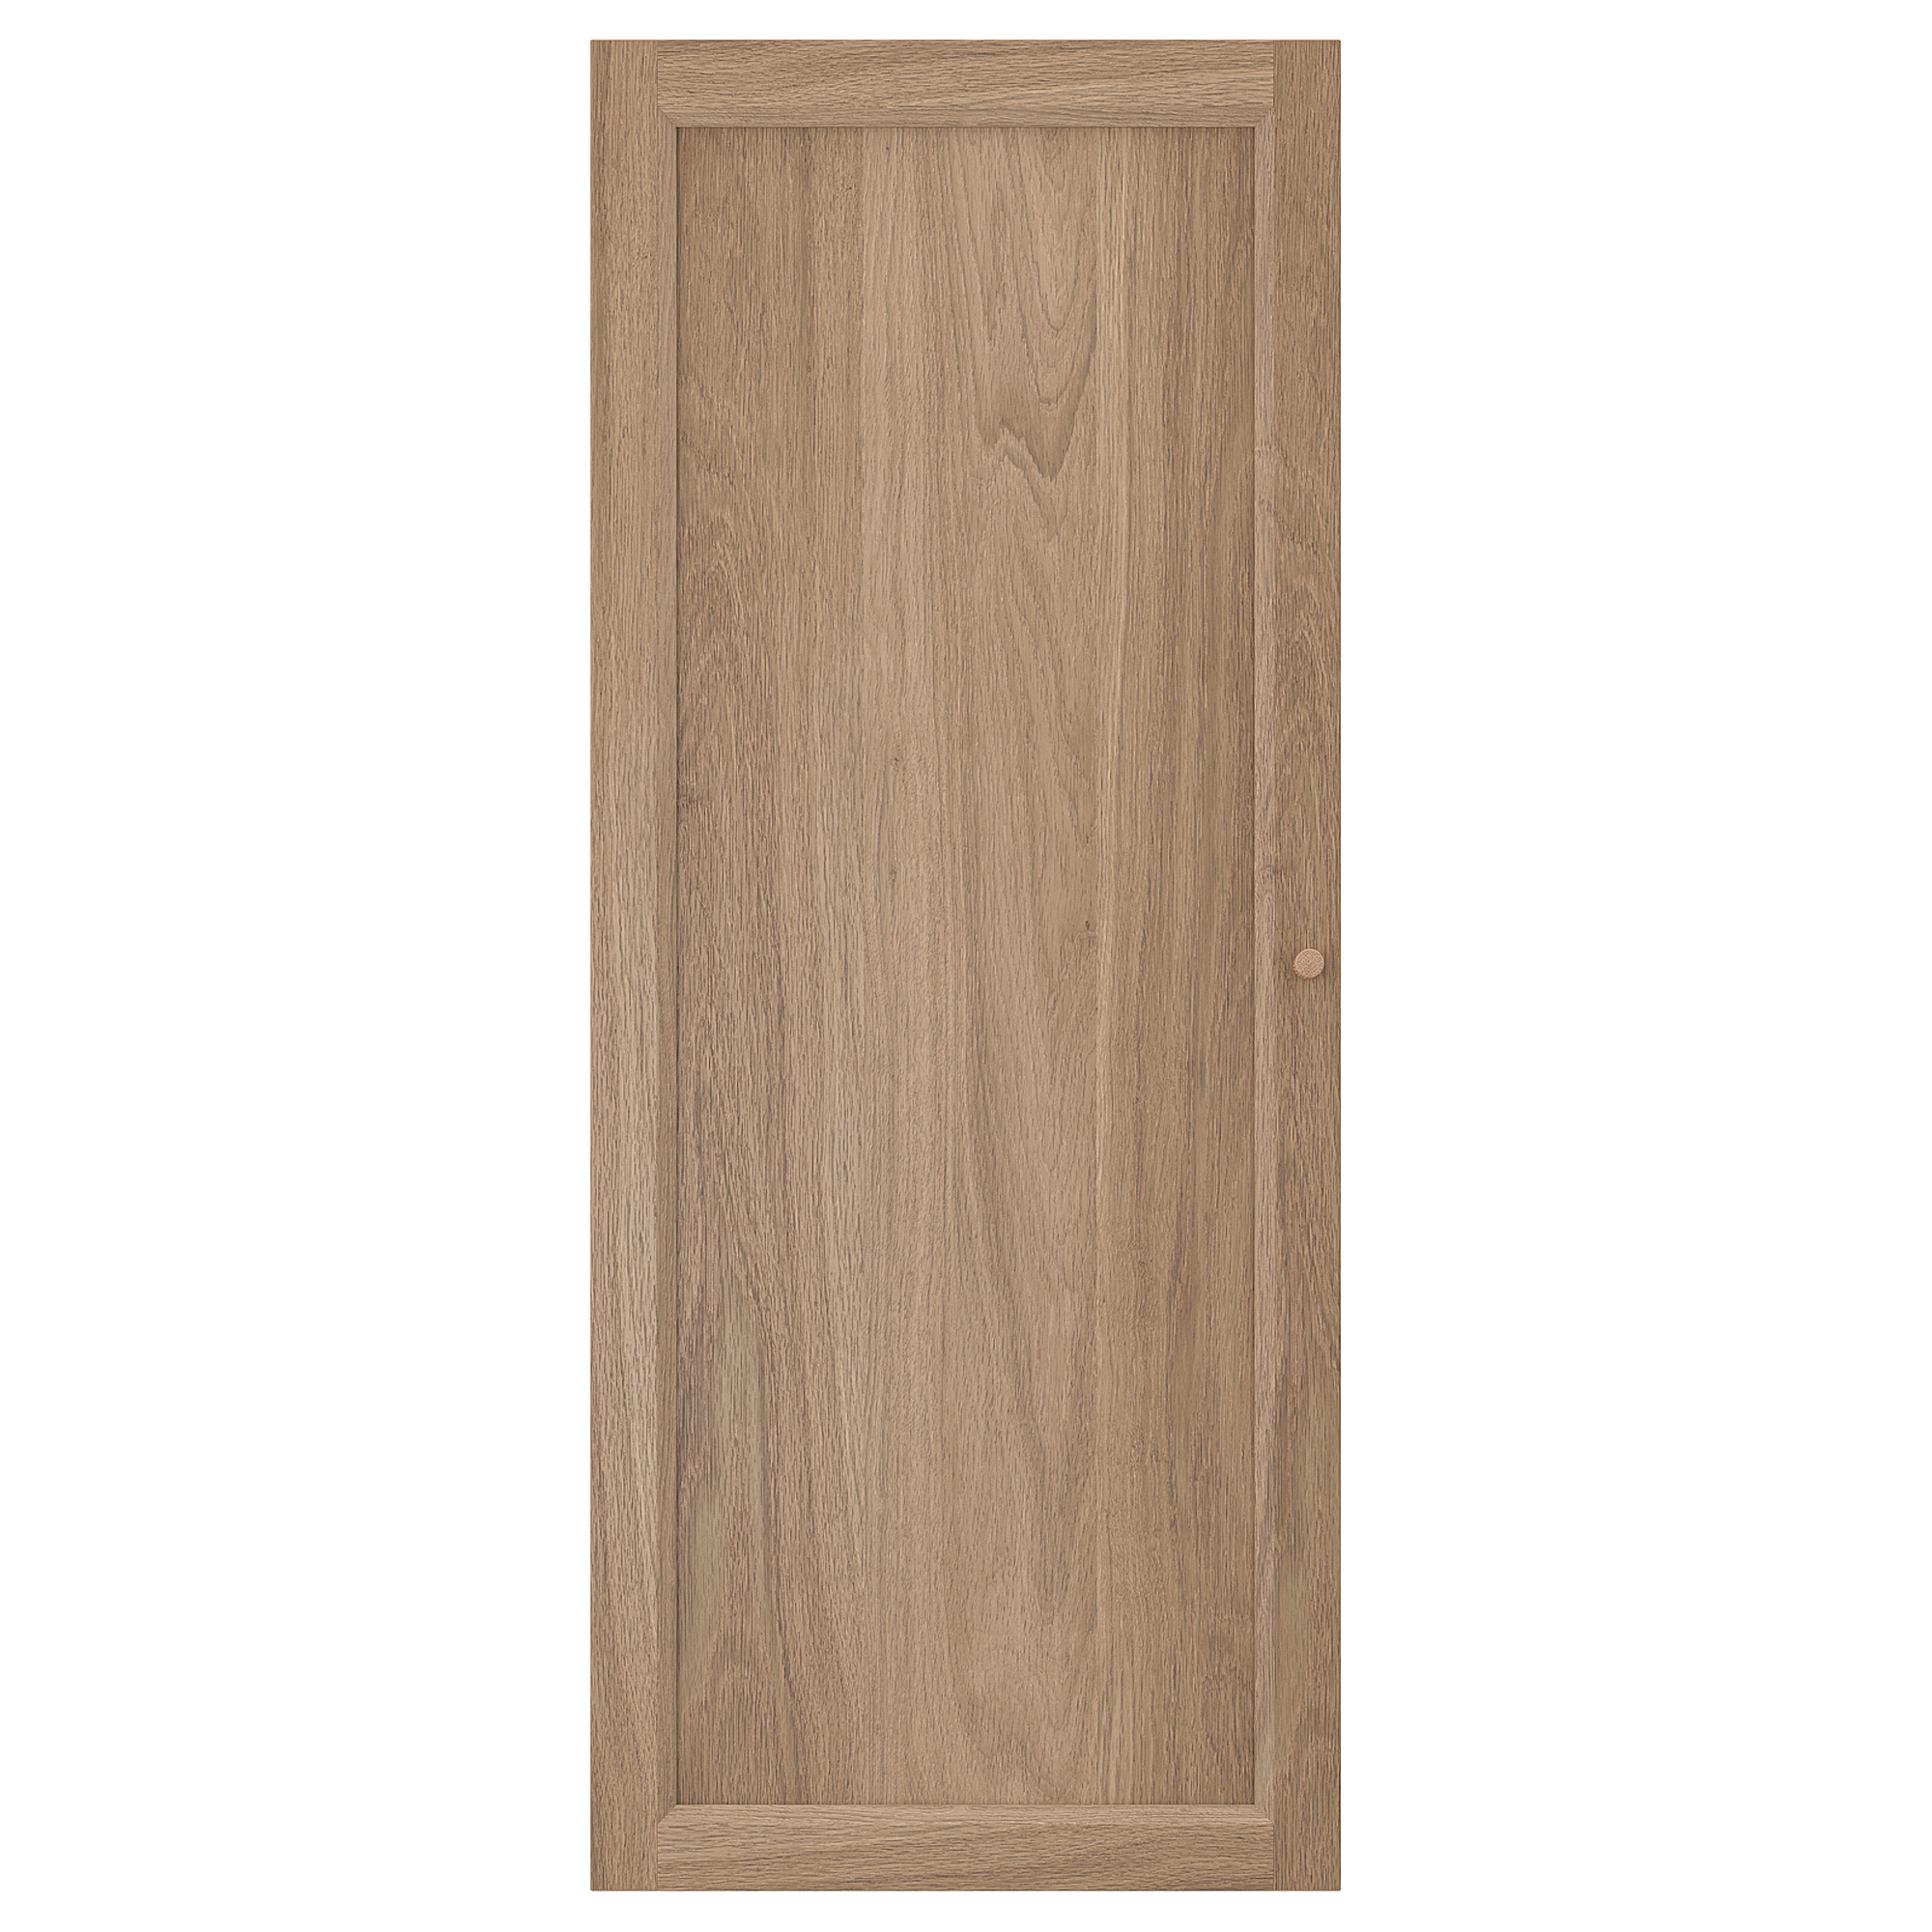 OXBERG - 櫃門, 橡木紋, 40x97 厘米| IKEA 香港及澳門